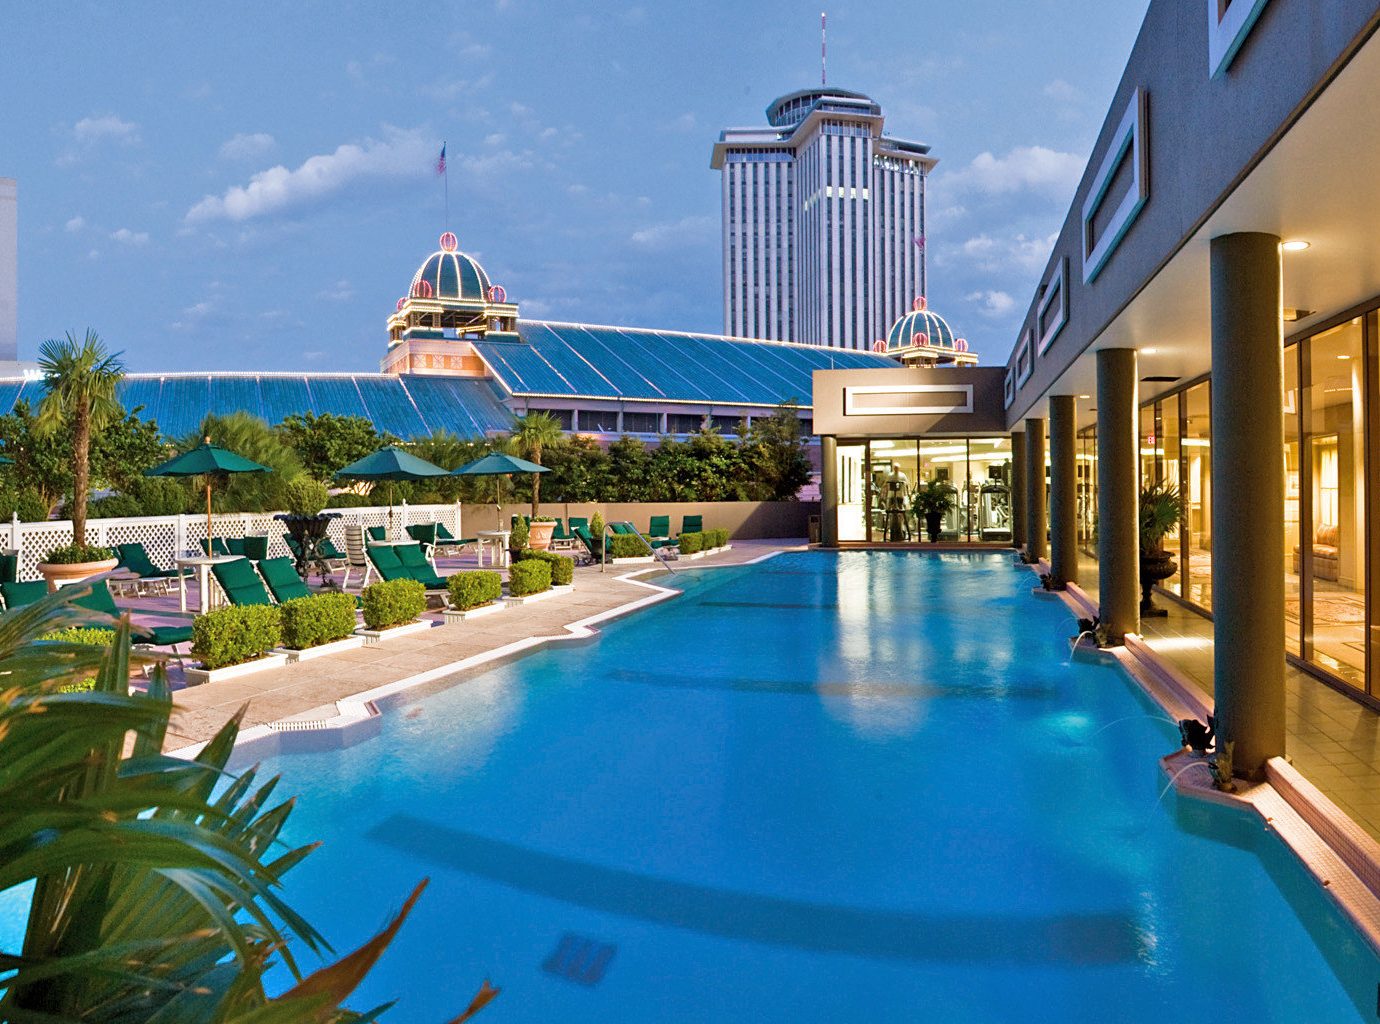 Hotels leisure swimming pool Resort property Pool Water park vacation estate amusement park condominium blue swimming